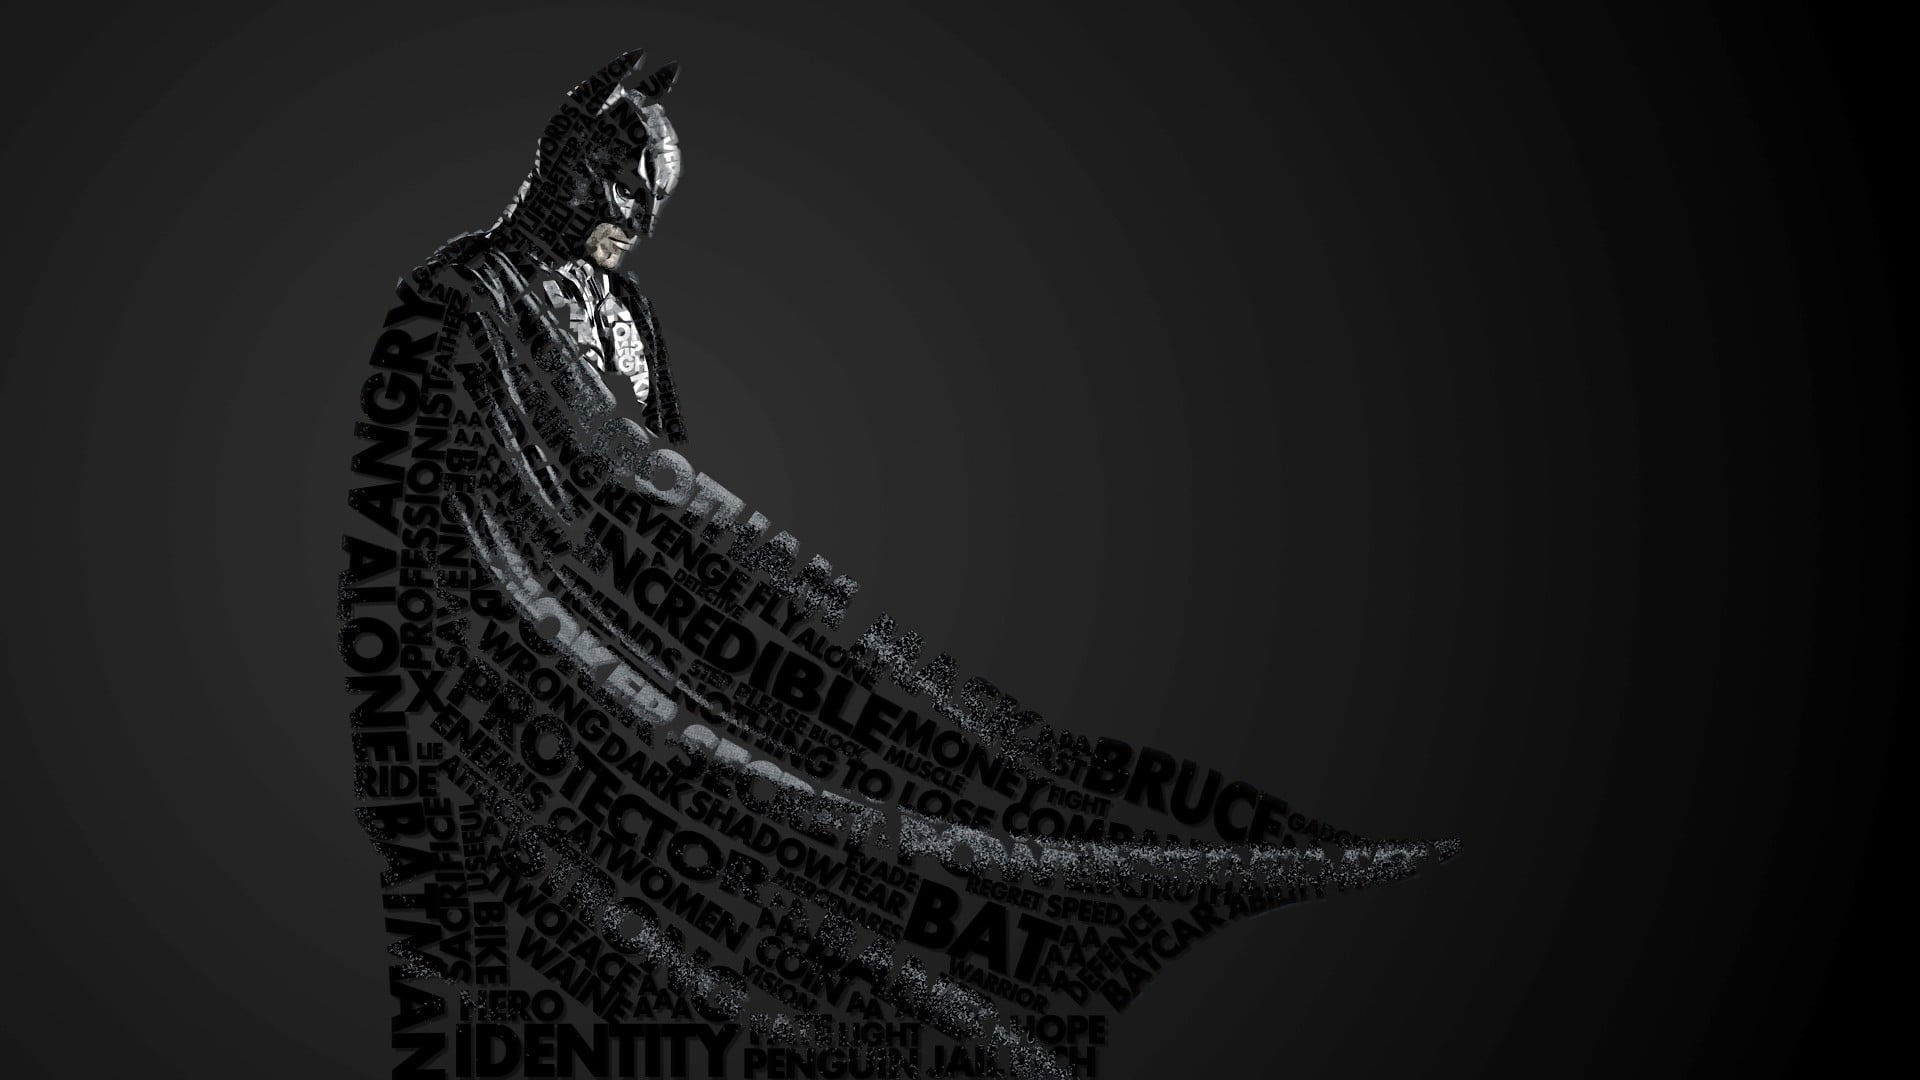 DC Batman wallpaper, text, monochrome, artwork, DC Comics, quote